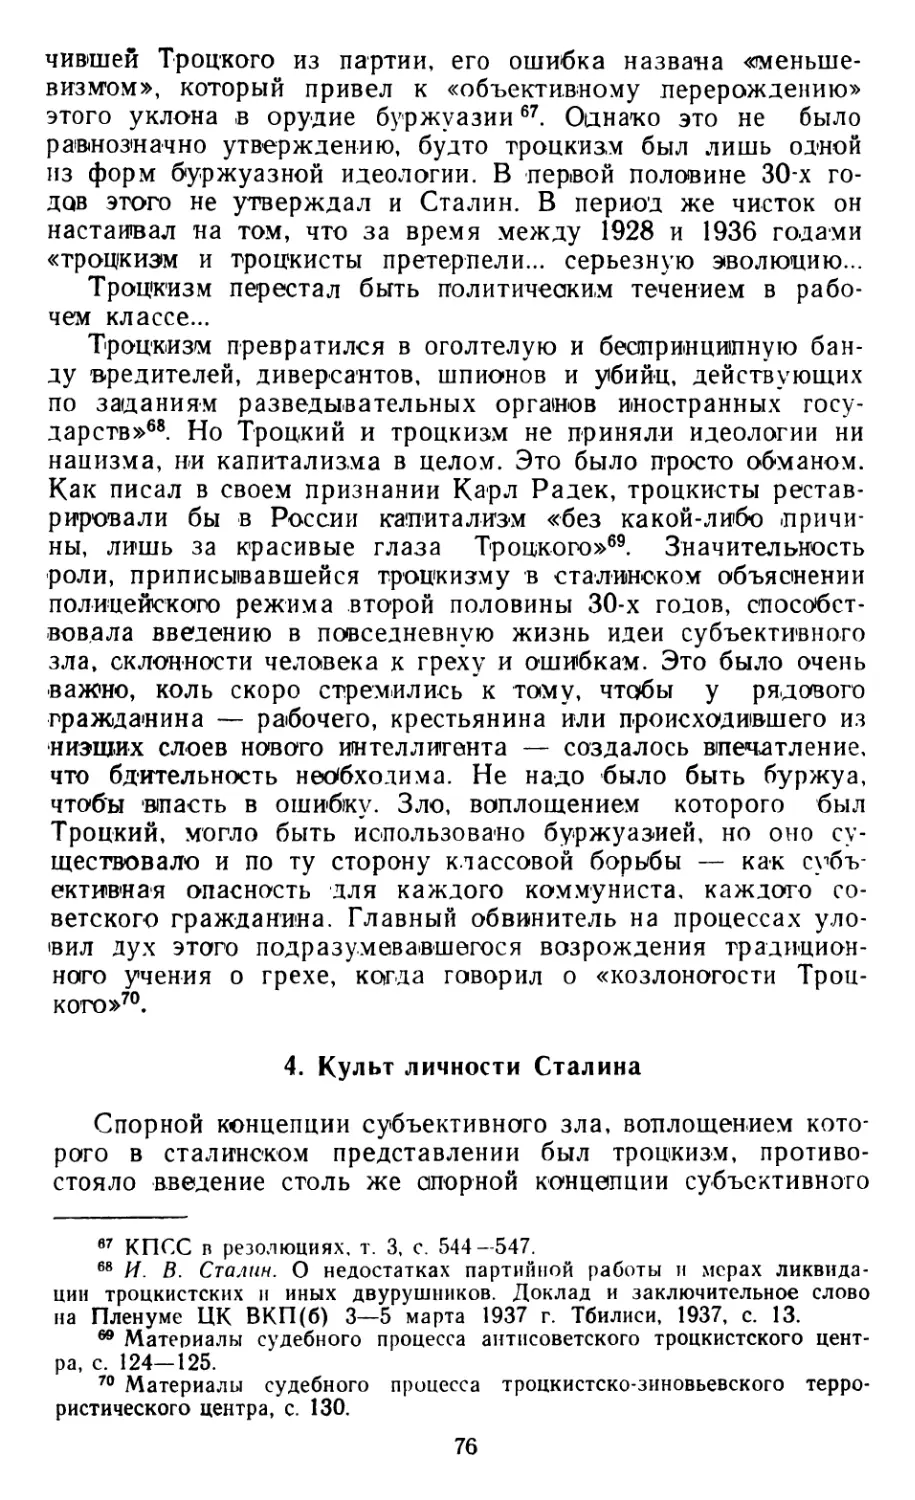 4. Культ личности Сталина